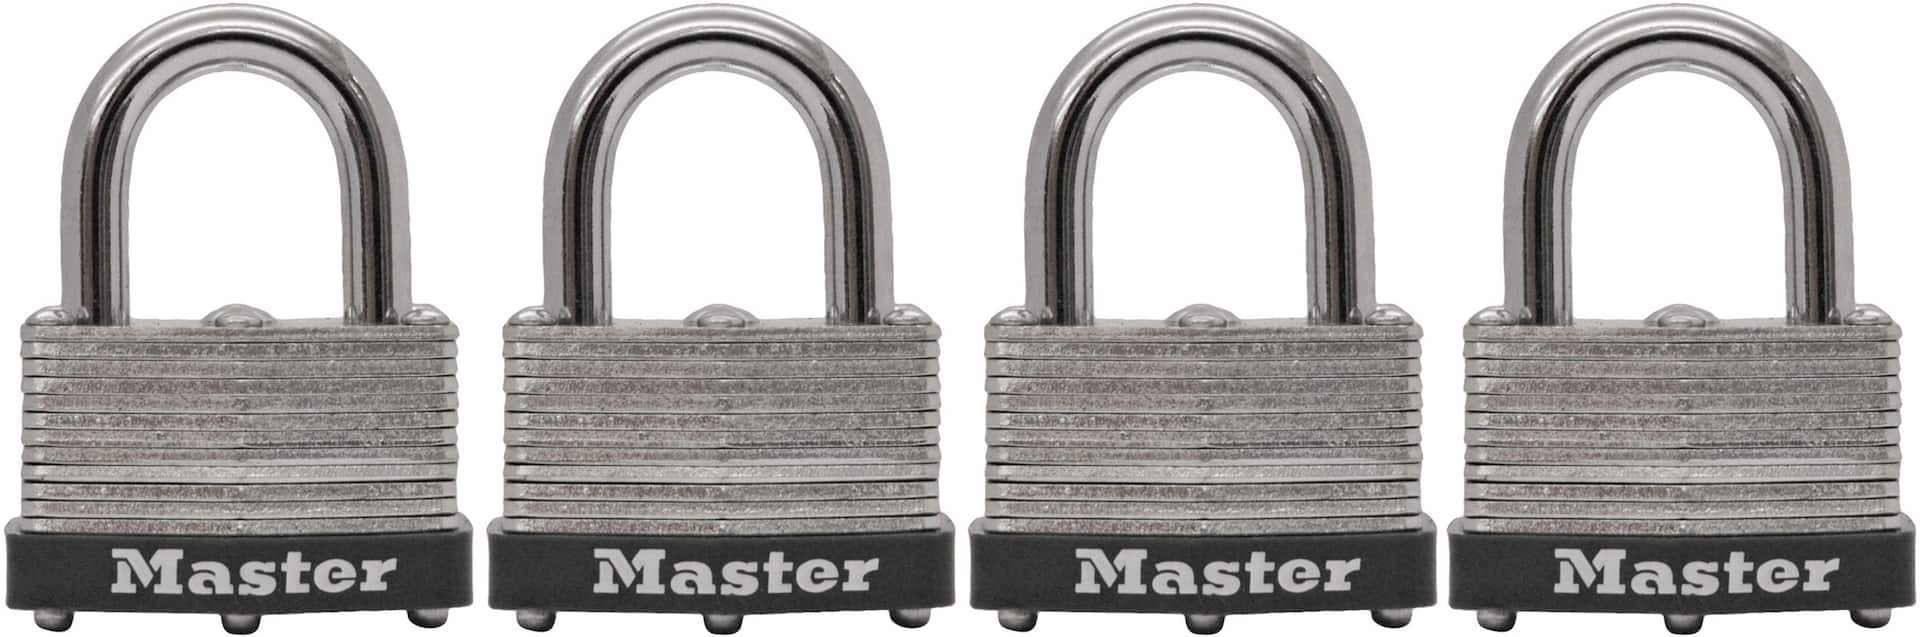 Master Lock 40mm-Wide Vinyl-Covered Solid Body Keyed Padlocks with 22mm  Shackles, Black, 4-pk